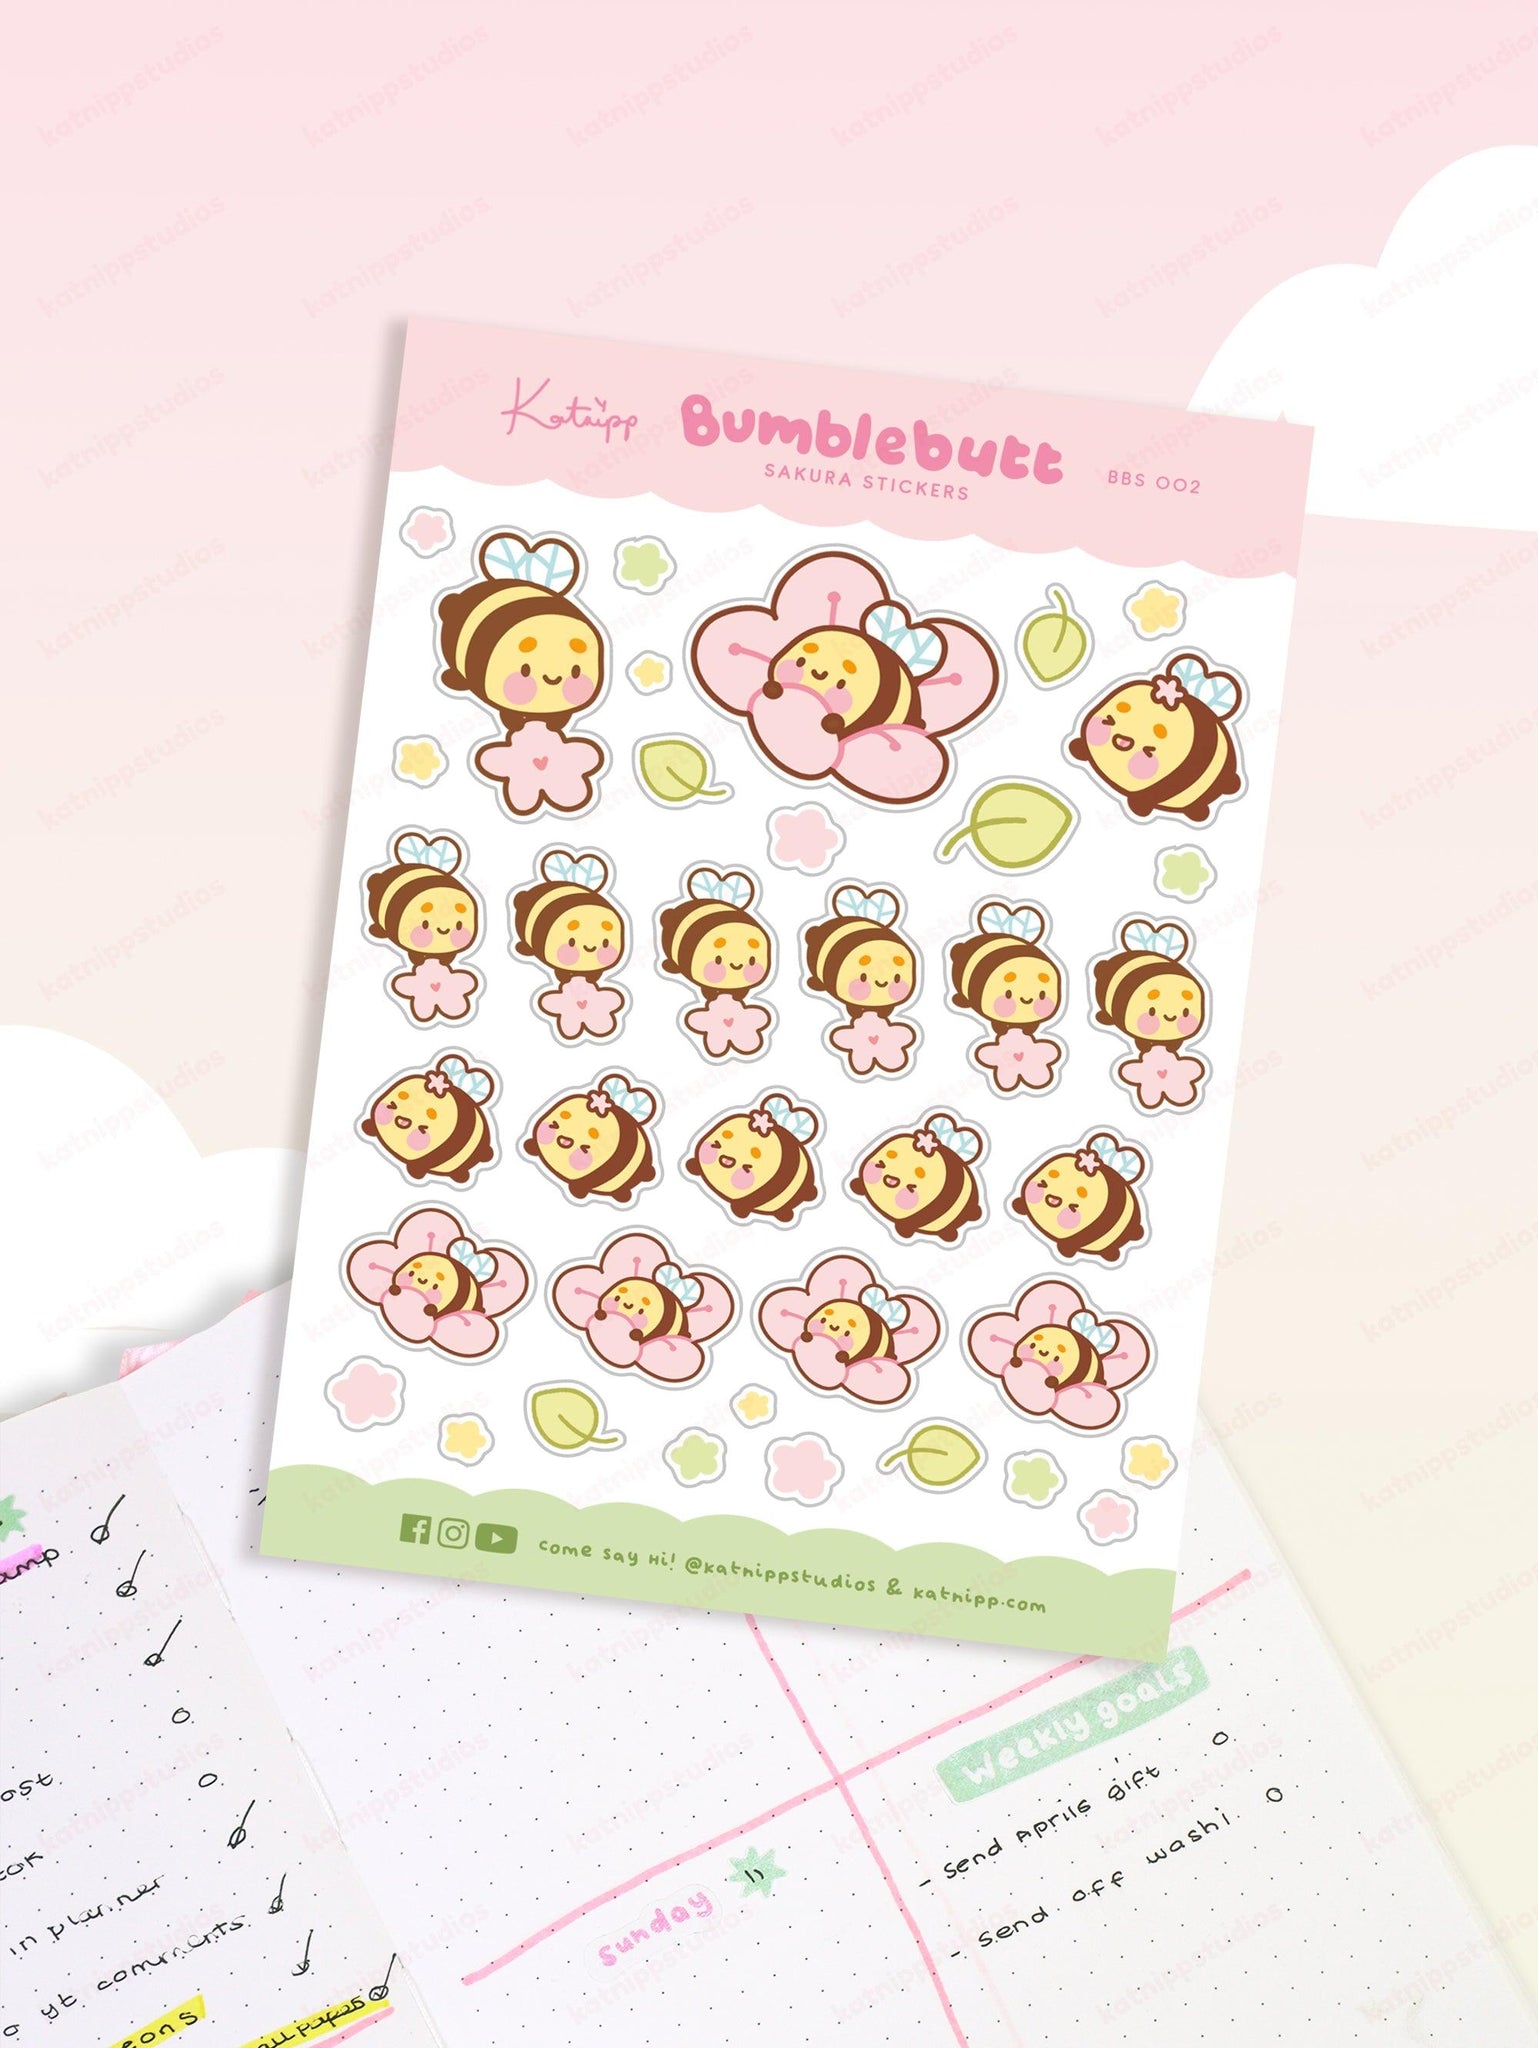 Bumblebutt Sakura Planner Sticker Sheet - BBS 002 - Katnipp Studios